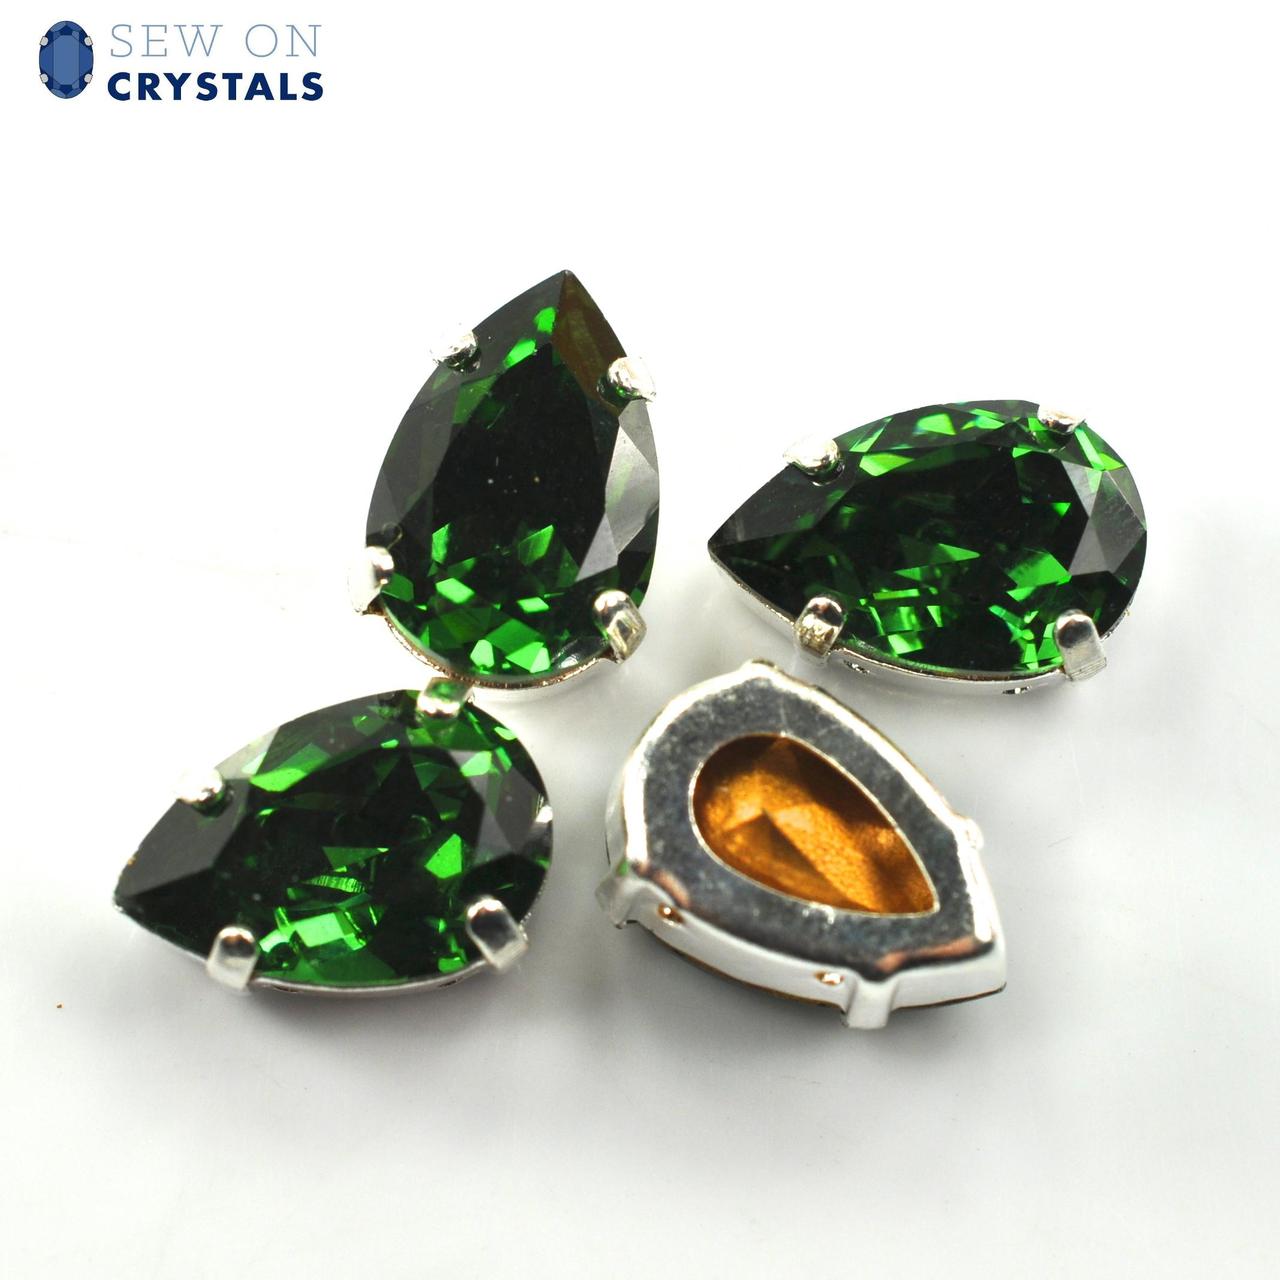 Green Turmaline 13x8.5mm Pear Sew On Crystals - 4 Pieces